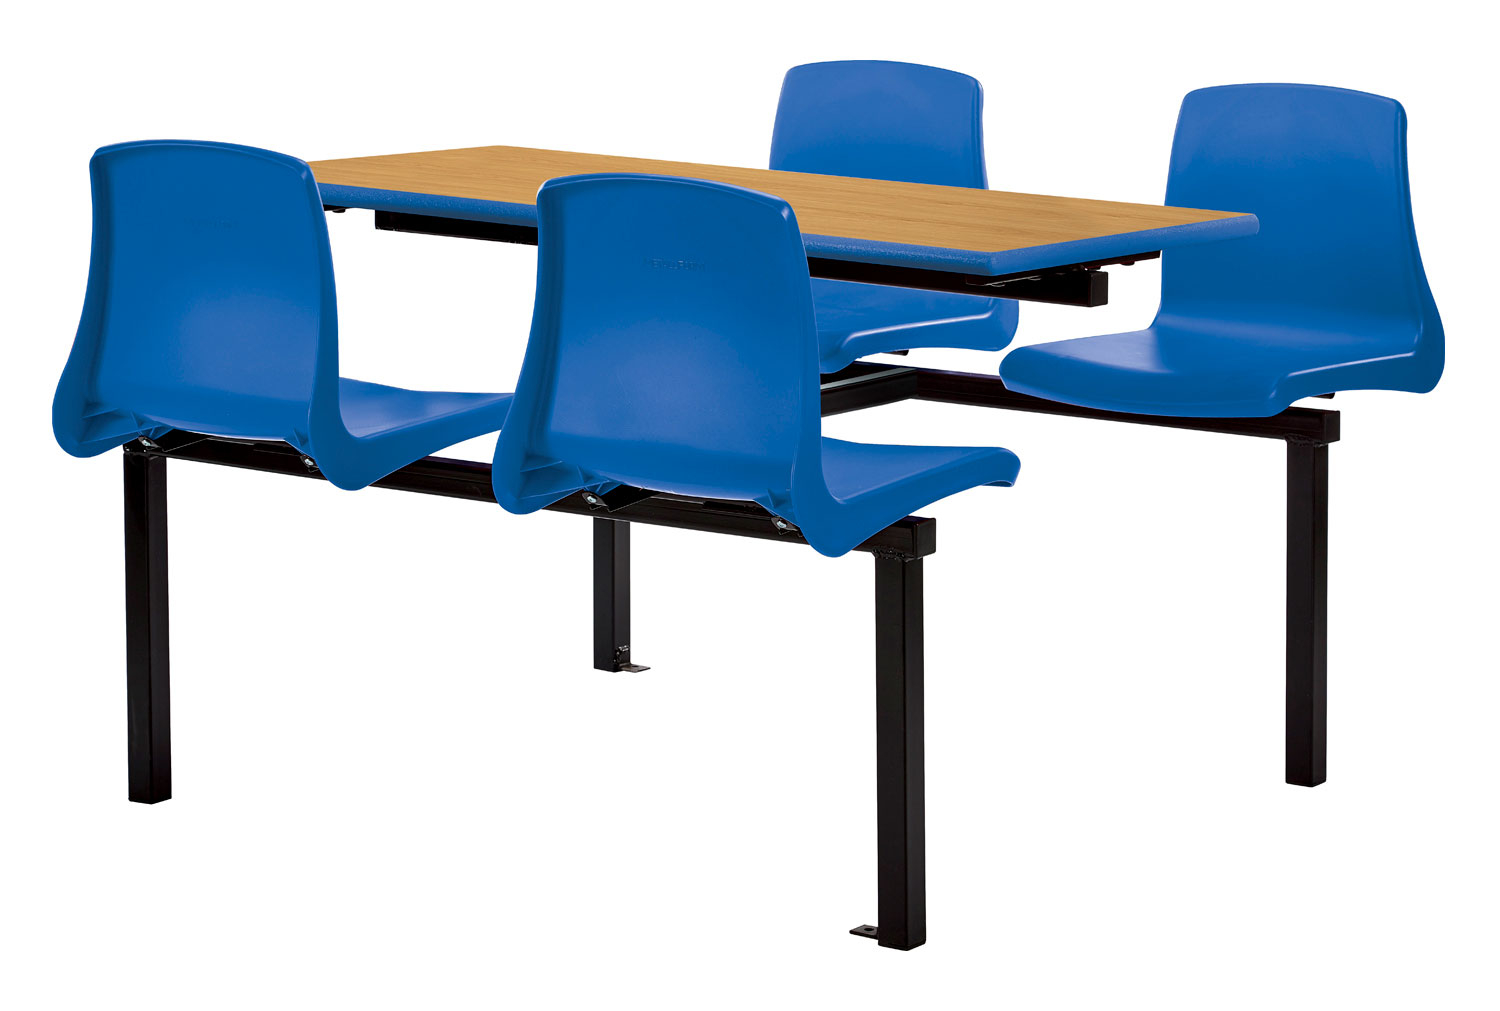 Metalliform 4 Seater Canteen Table & NP School Classroom Chairs (Black Frame), Double Entry, BlueTop, PU Blue Edge